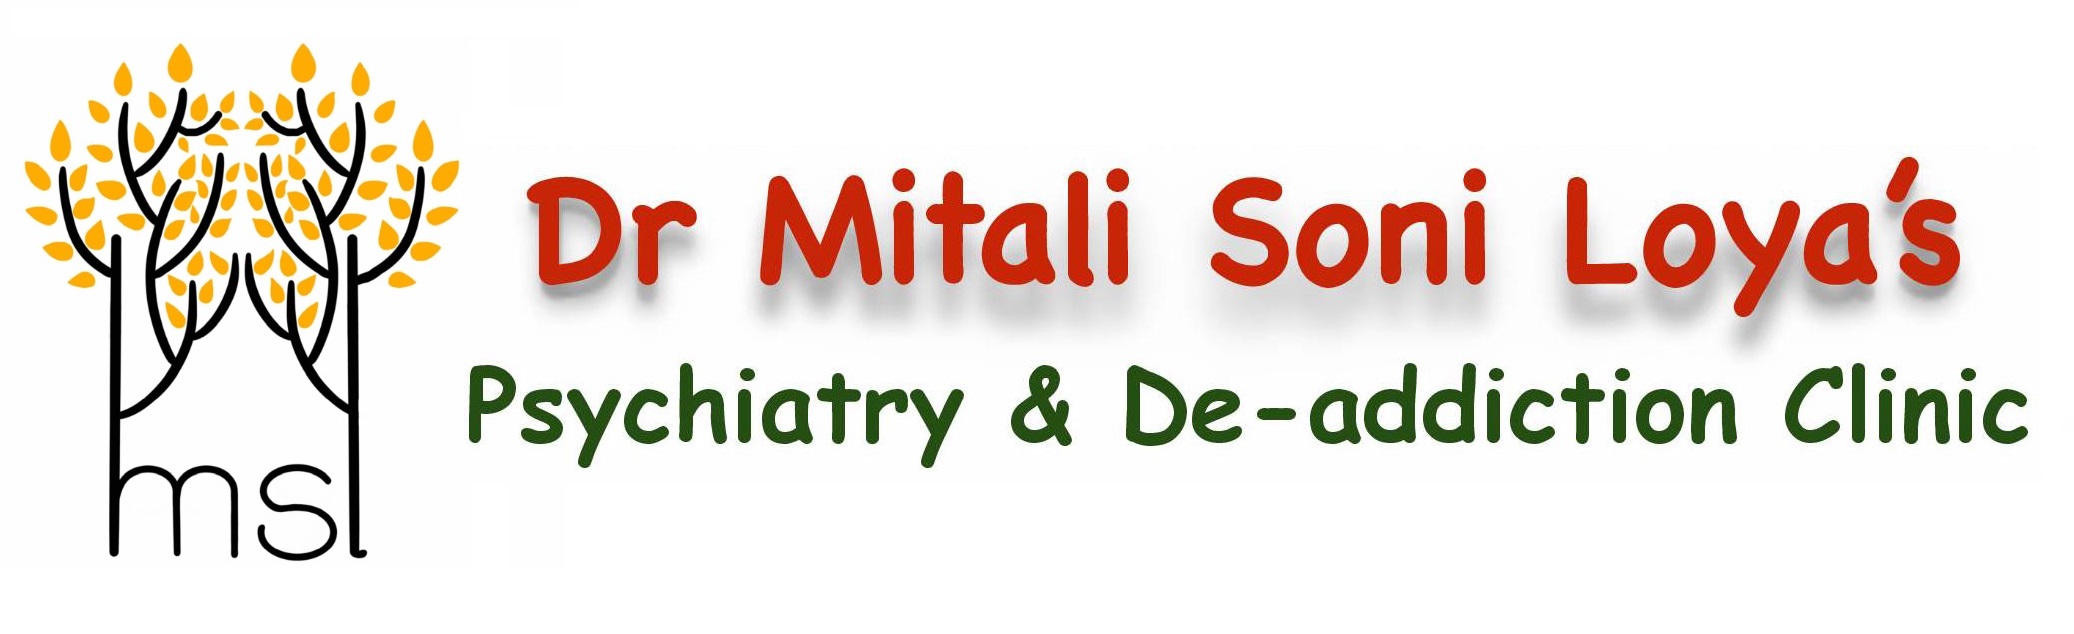 Dr. Mitali Soni Loya's